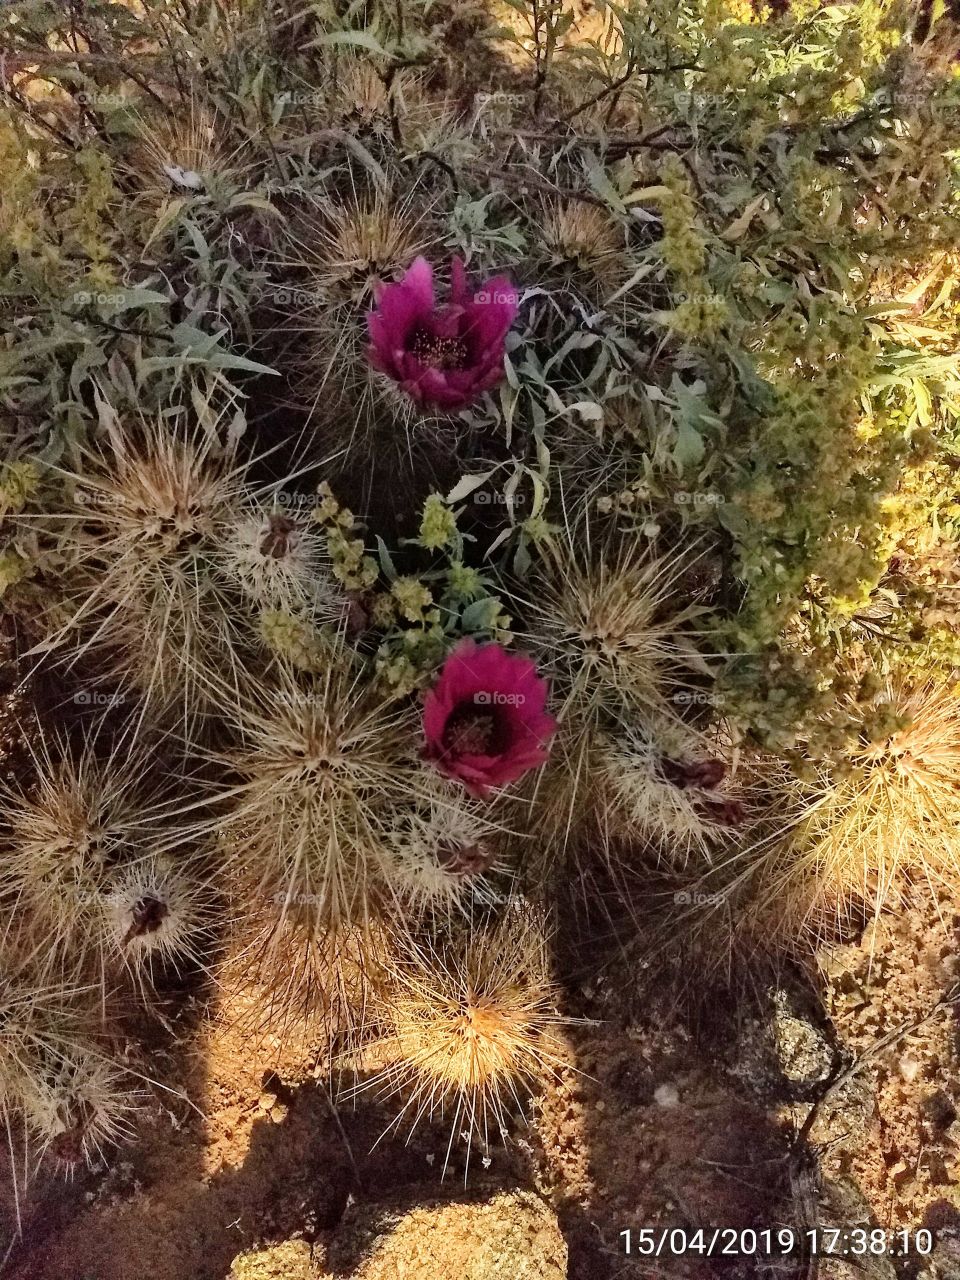 Tiny Barrel Cactus in bloom